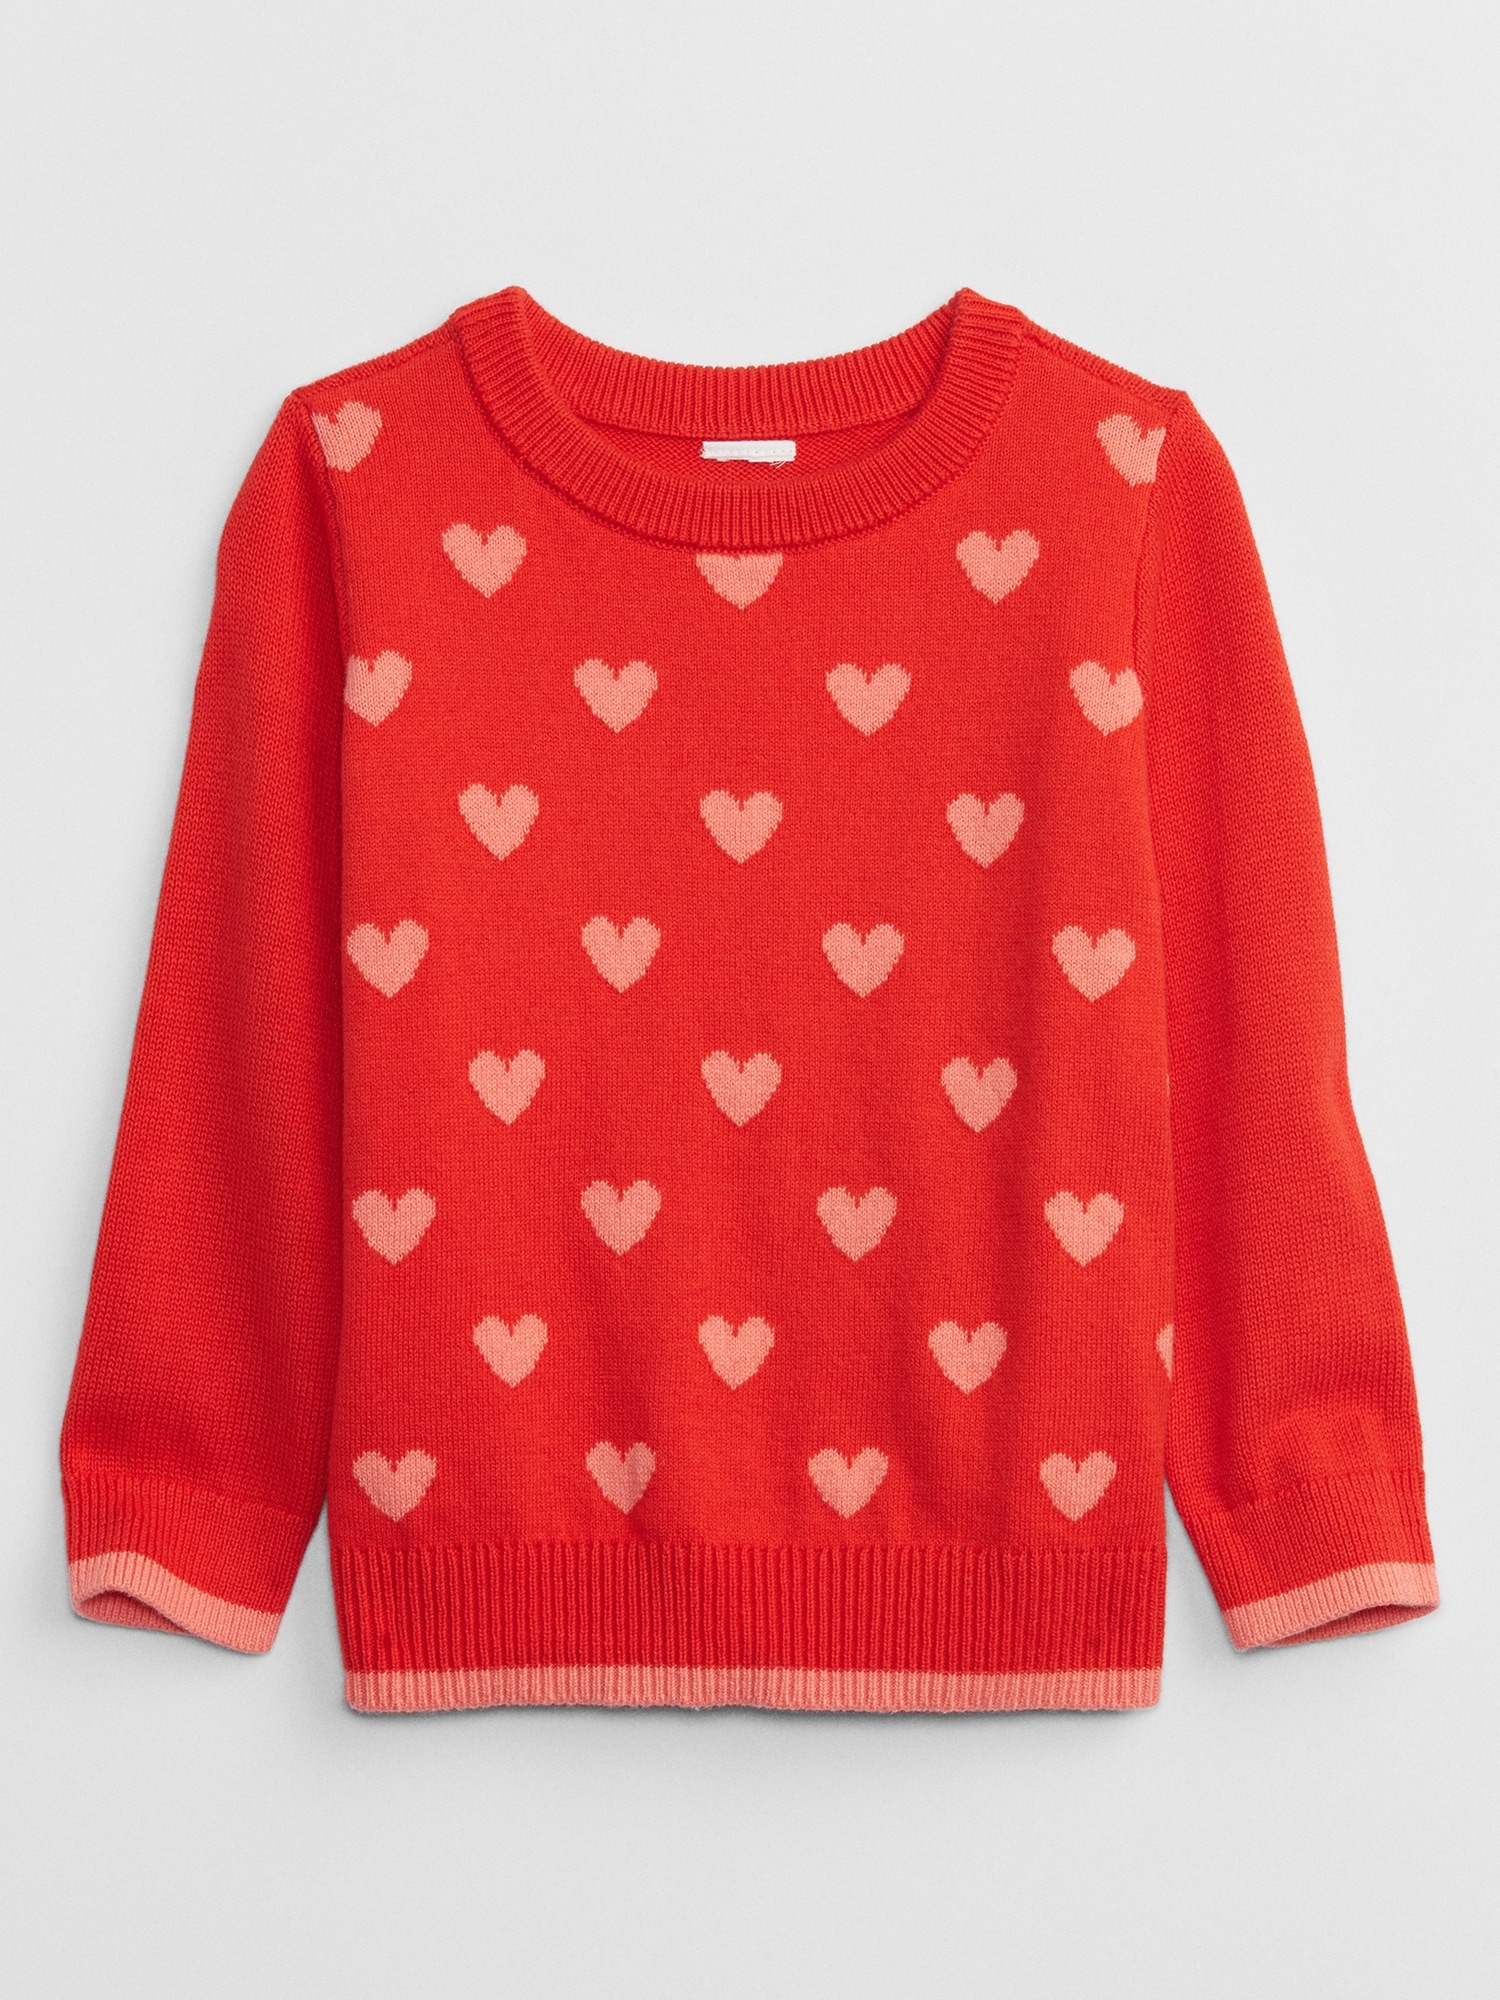 babyGap Heart Print Intarsia Sweater